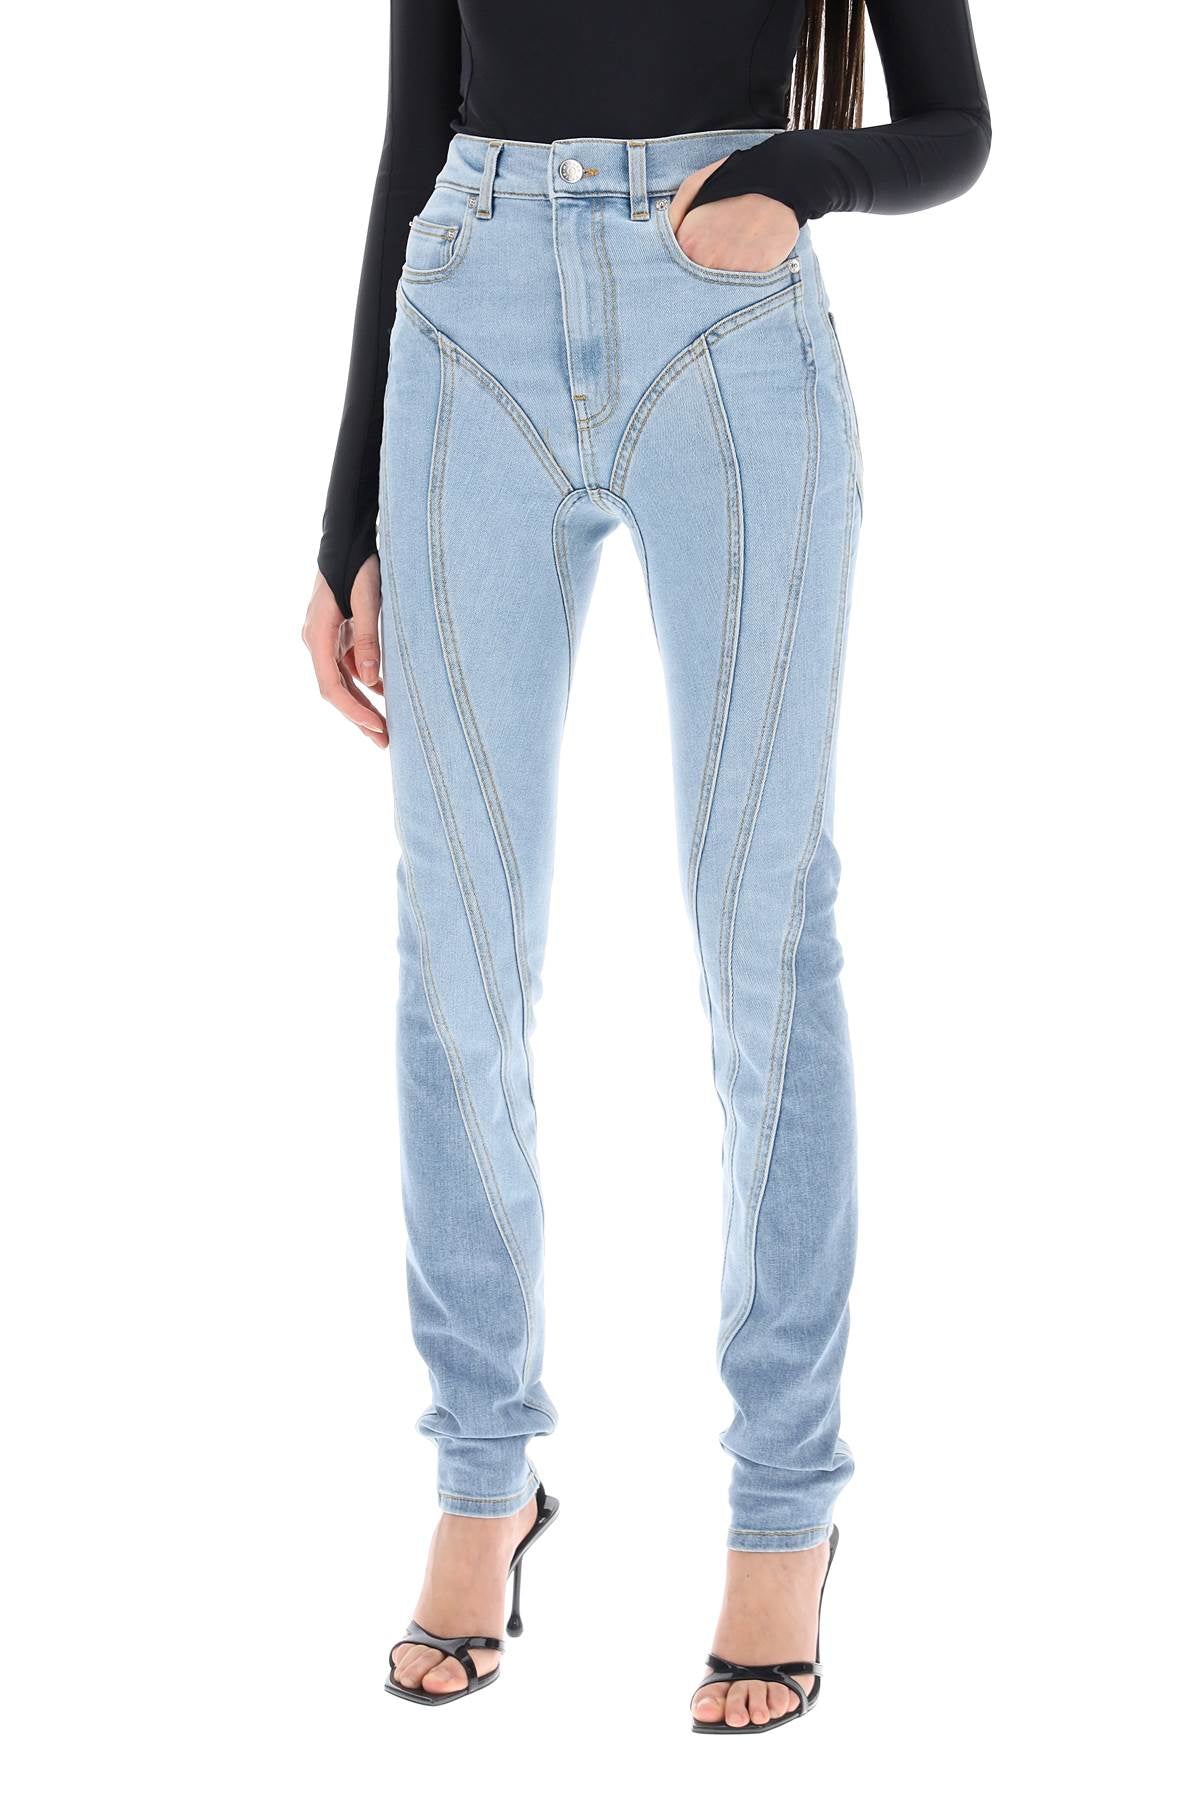 Mugler spiral two-tone skinny jeans-3